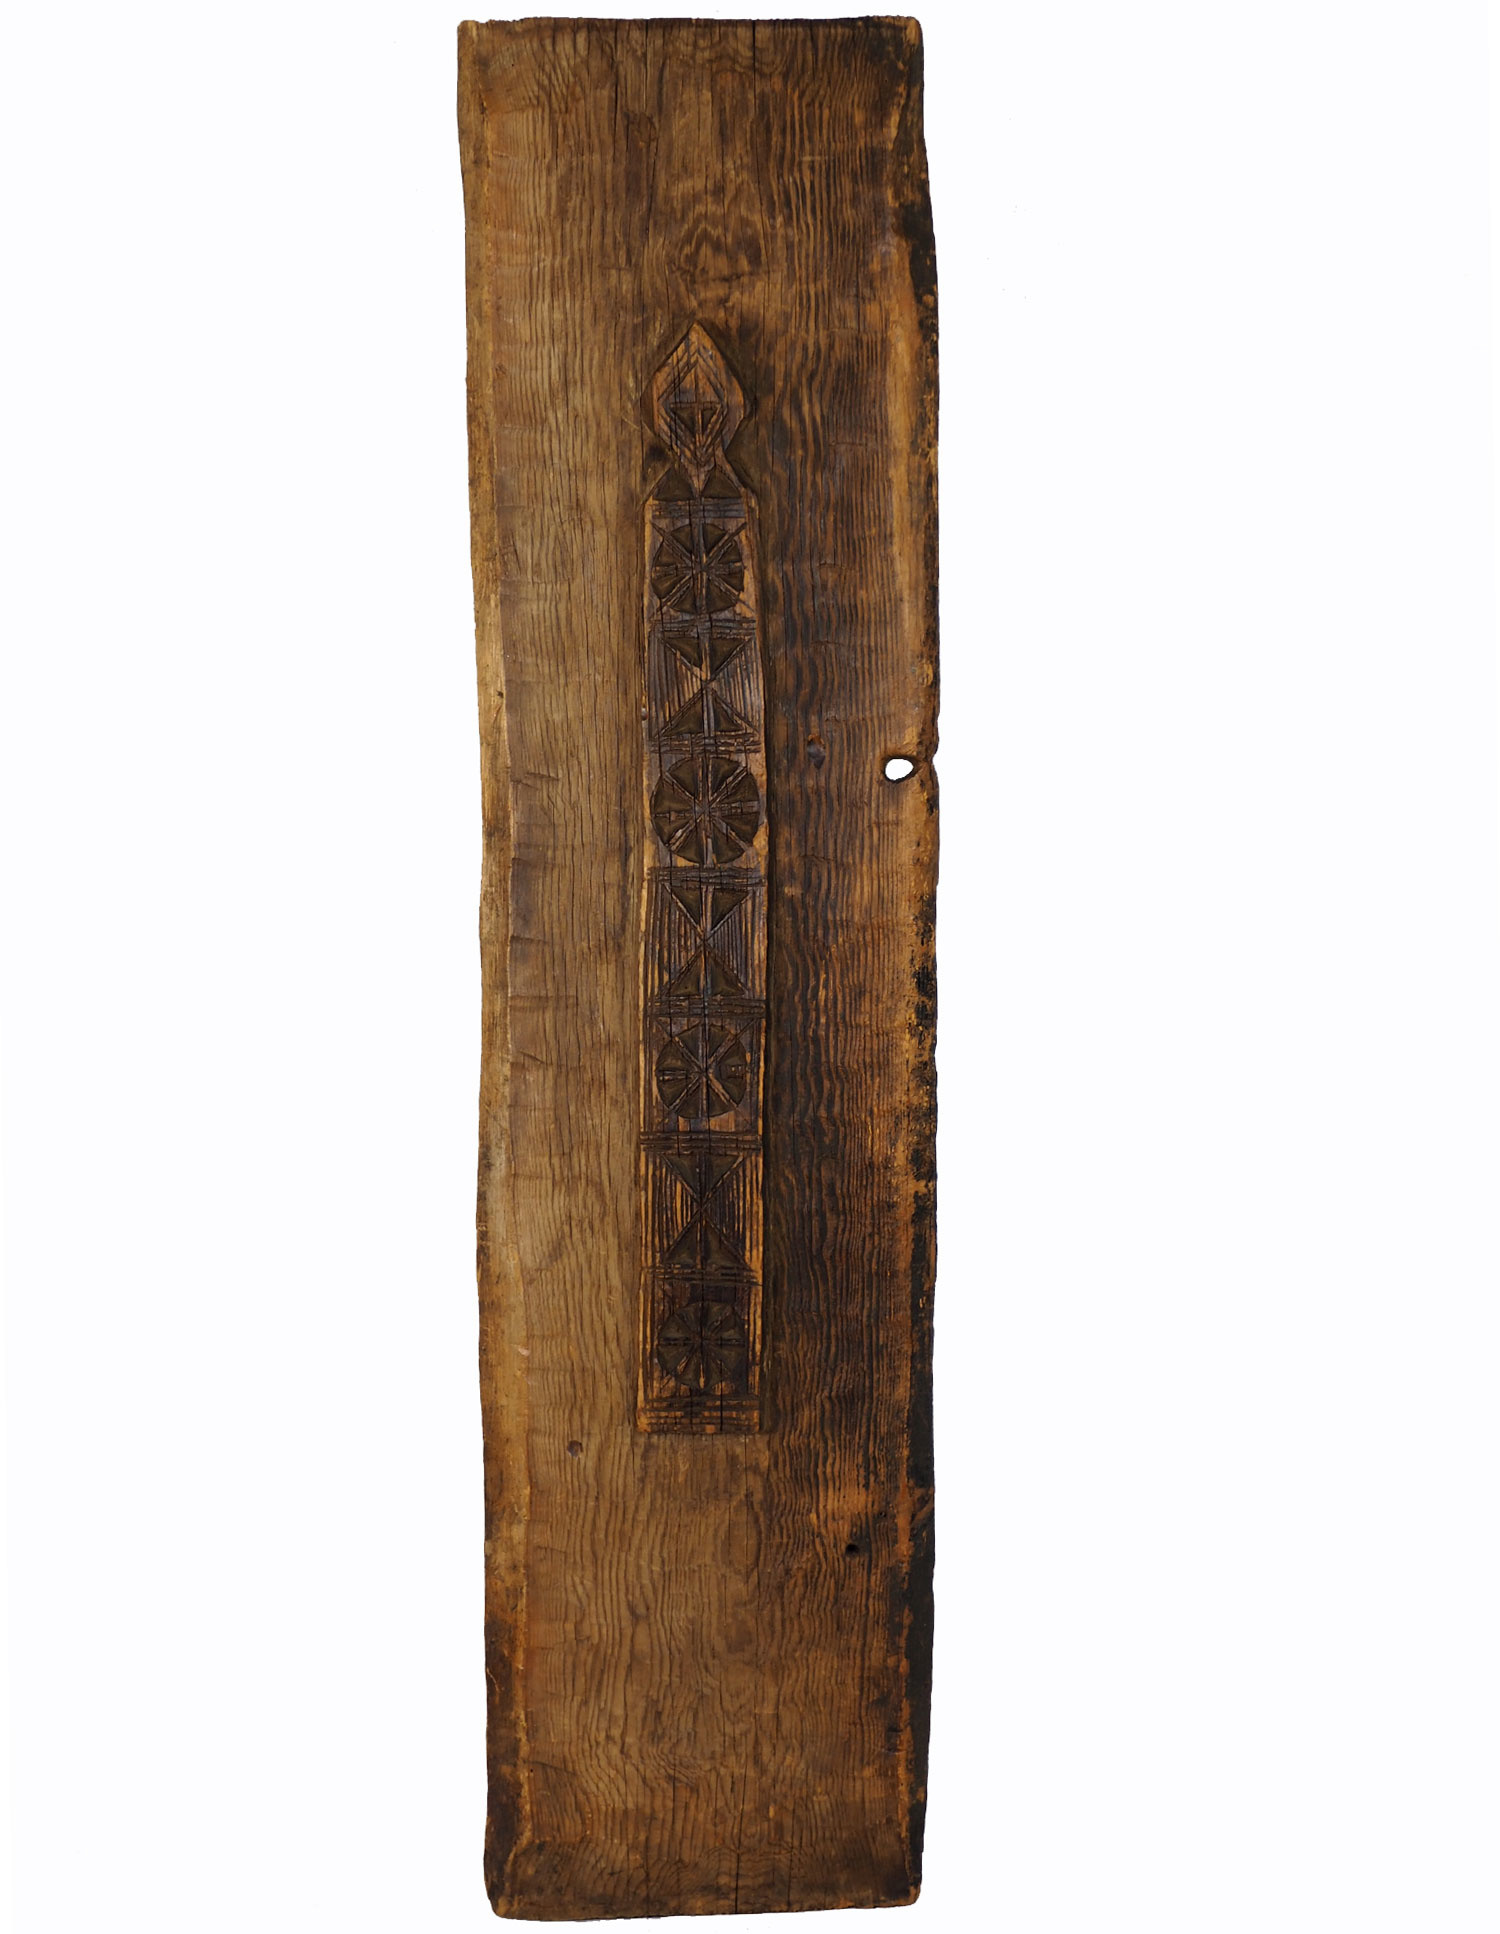 antik orient Massiv Holz Haustür Tür türplatte zimmertür Afghanistan Nuristan Pakistan Swat-Valley 19 Jh. Nr:19/A